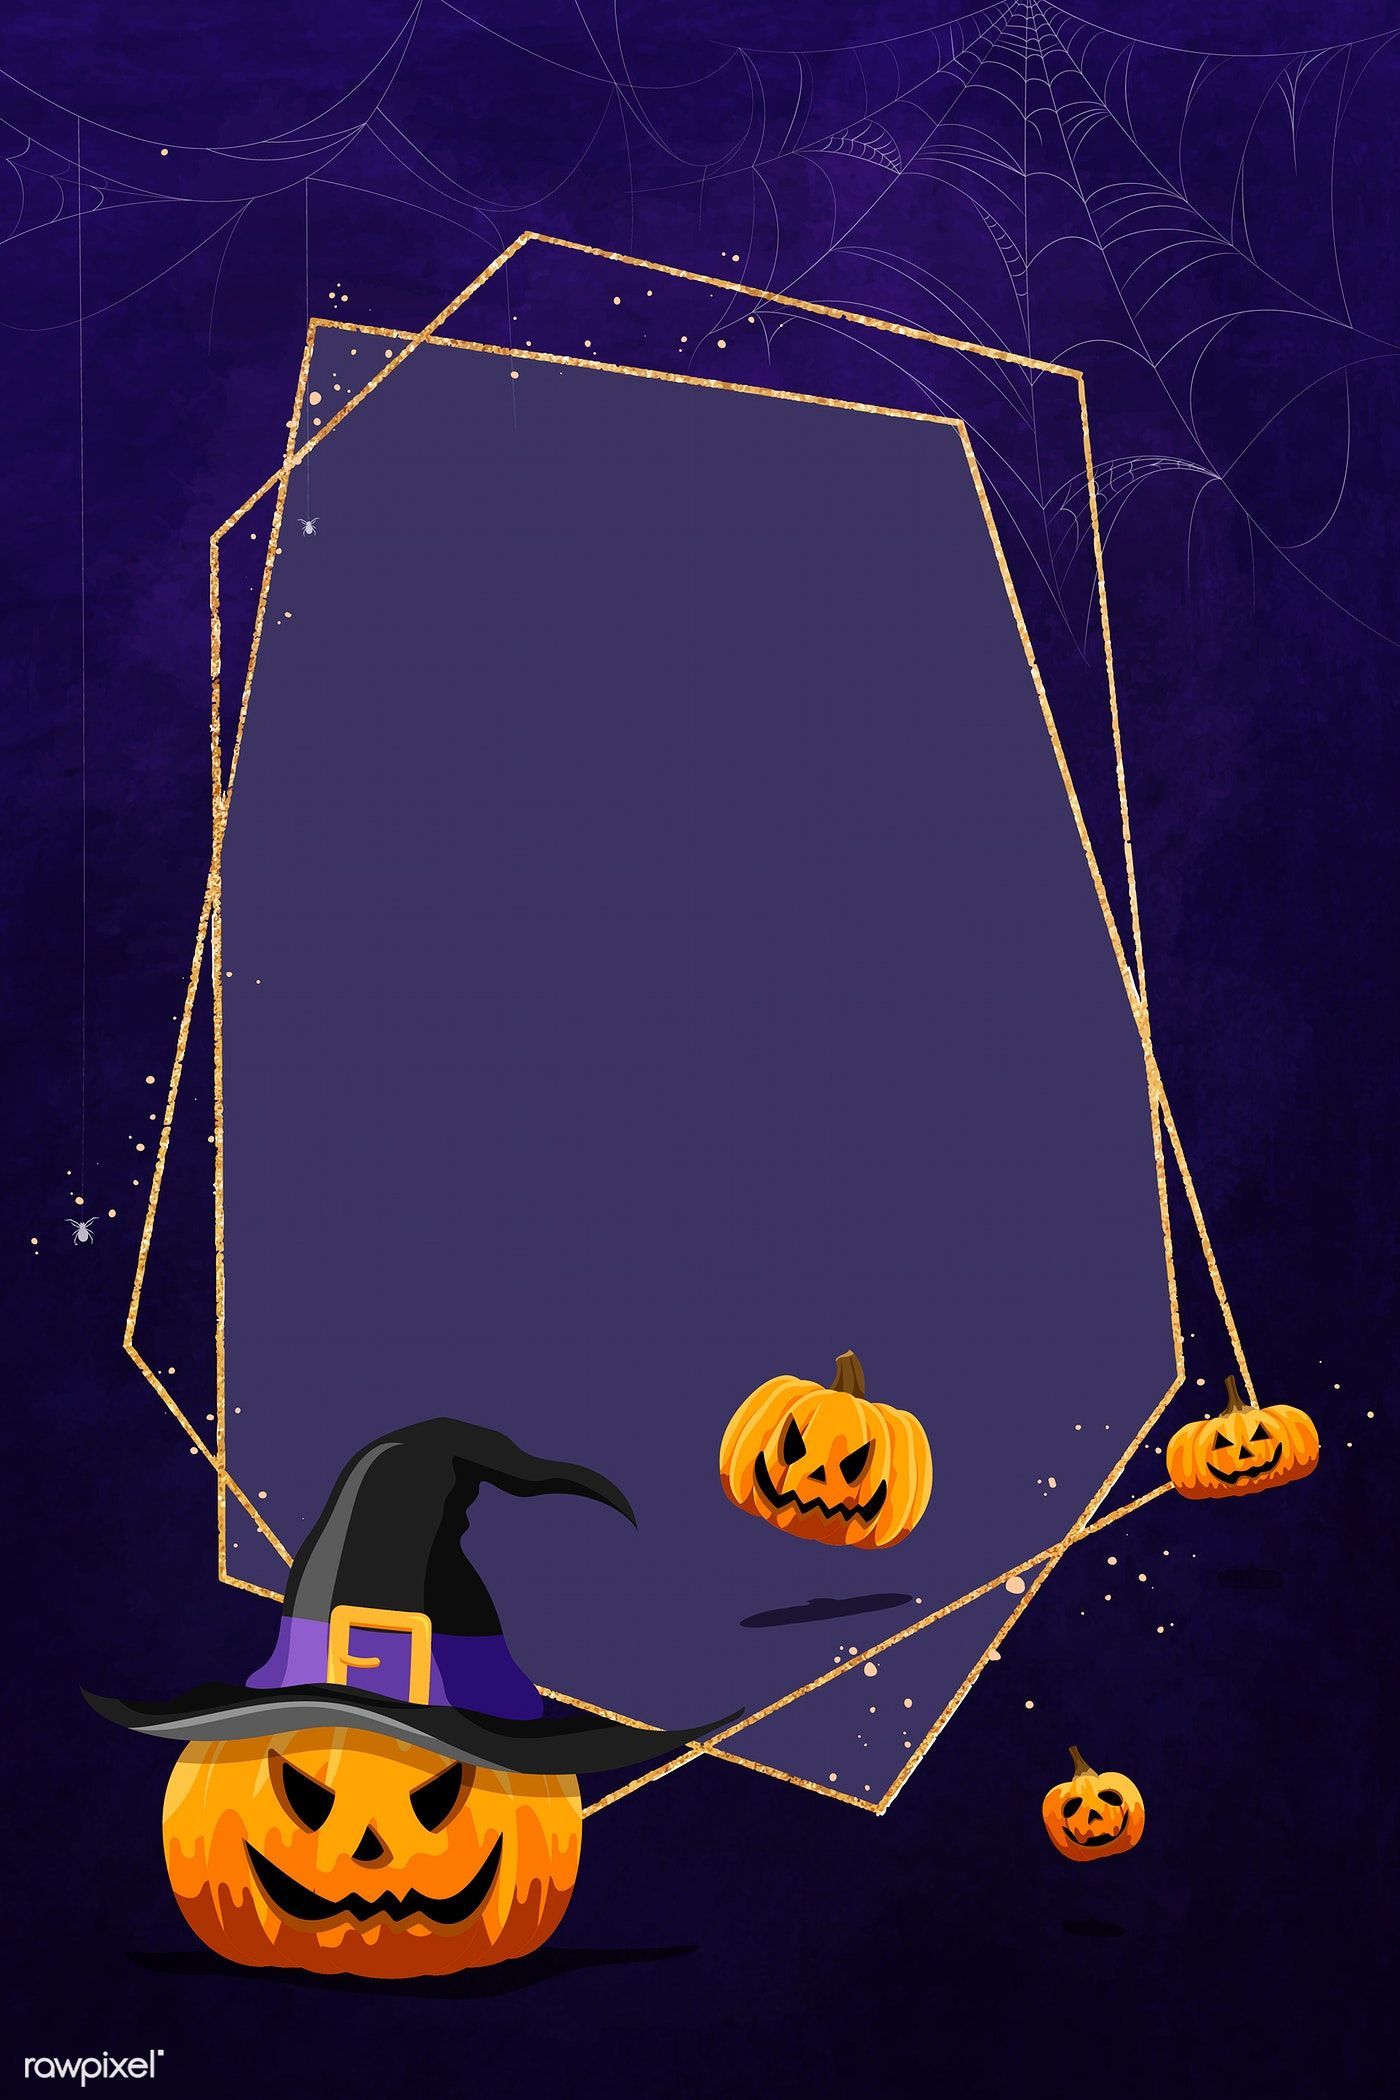 Jack O'Lantern frame on purple background vector. free image by rawpixel.com / Aew. Halloween wallpaper, Halloween frames, Halloween illustration